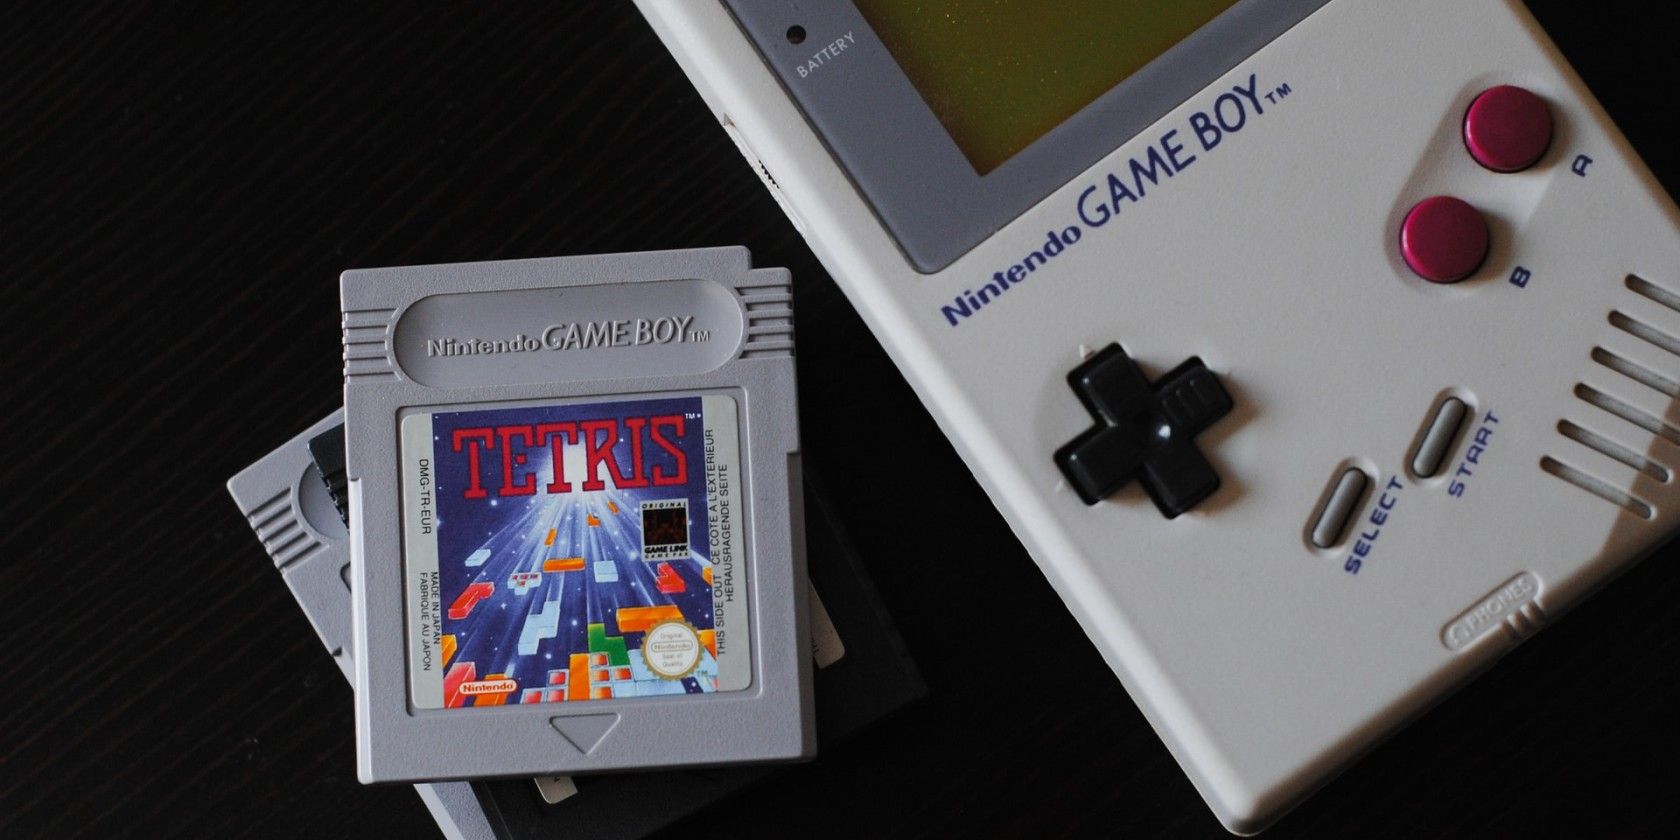 Tetris game on a retro console